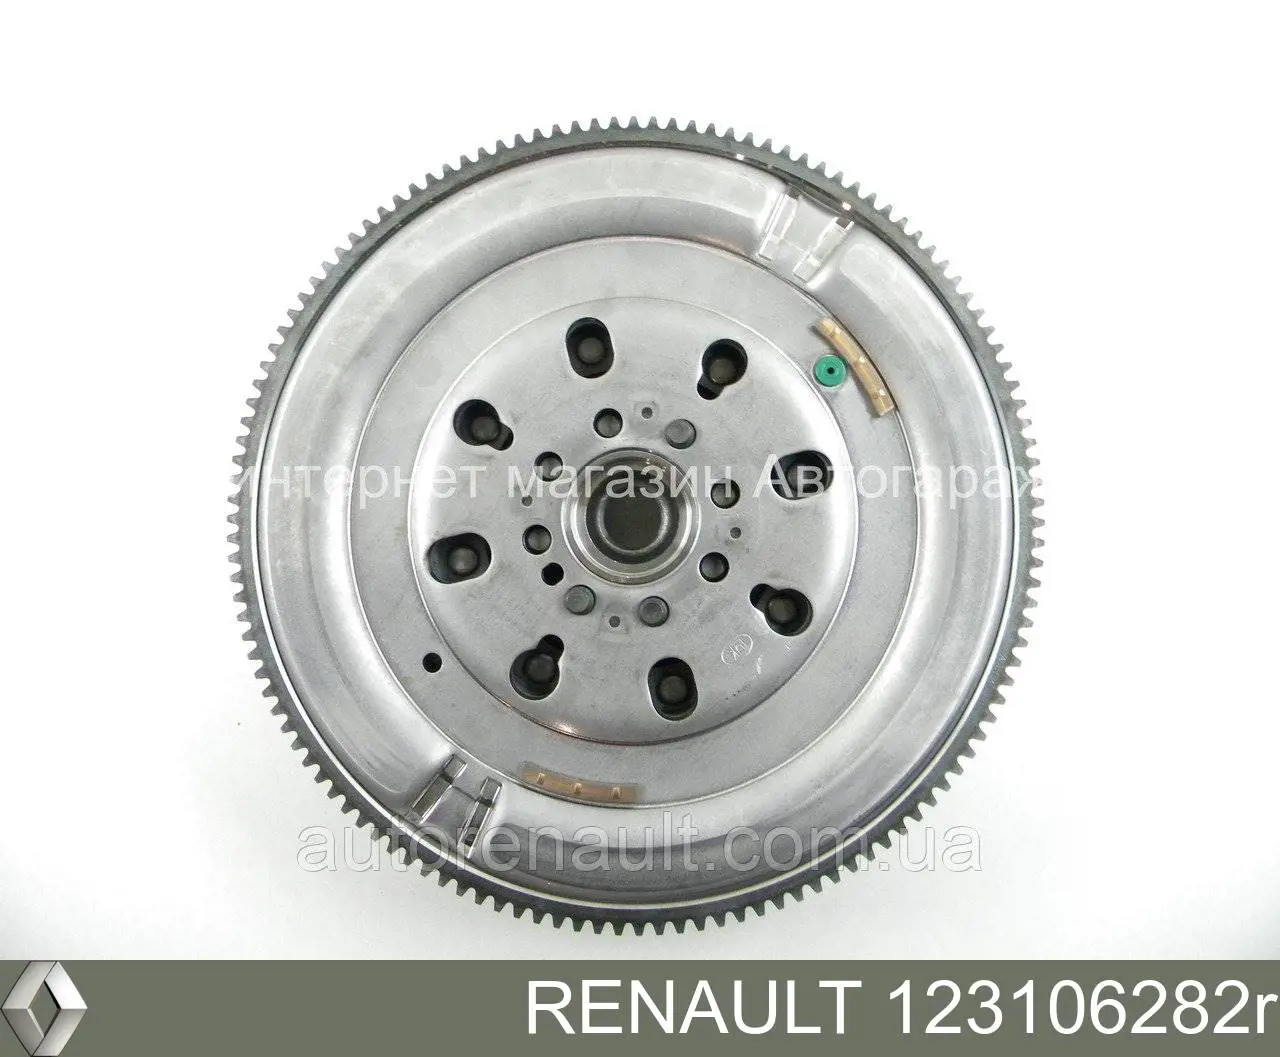 Маховик двигателя Renault (RVI) 123106282R